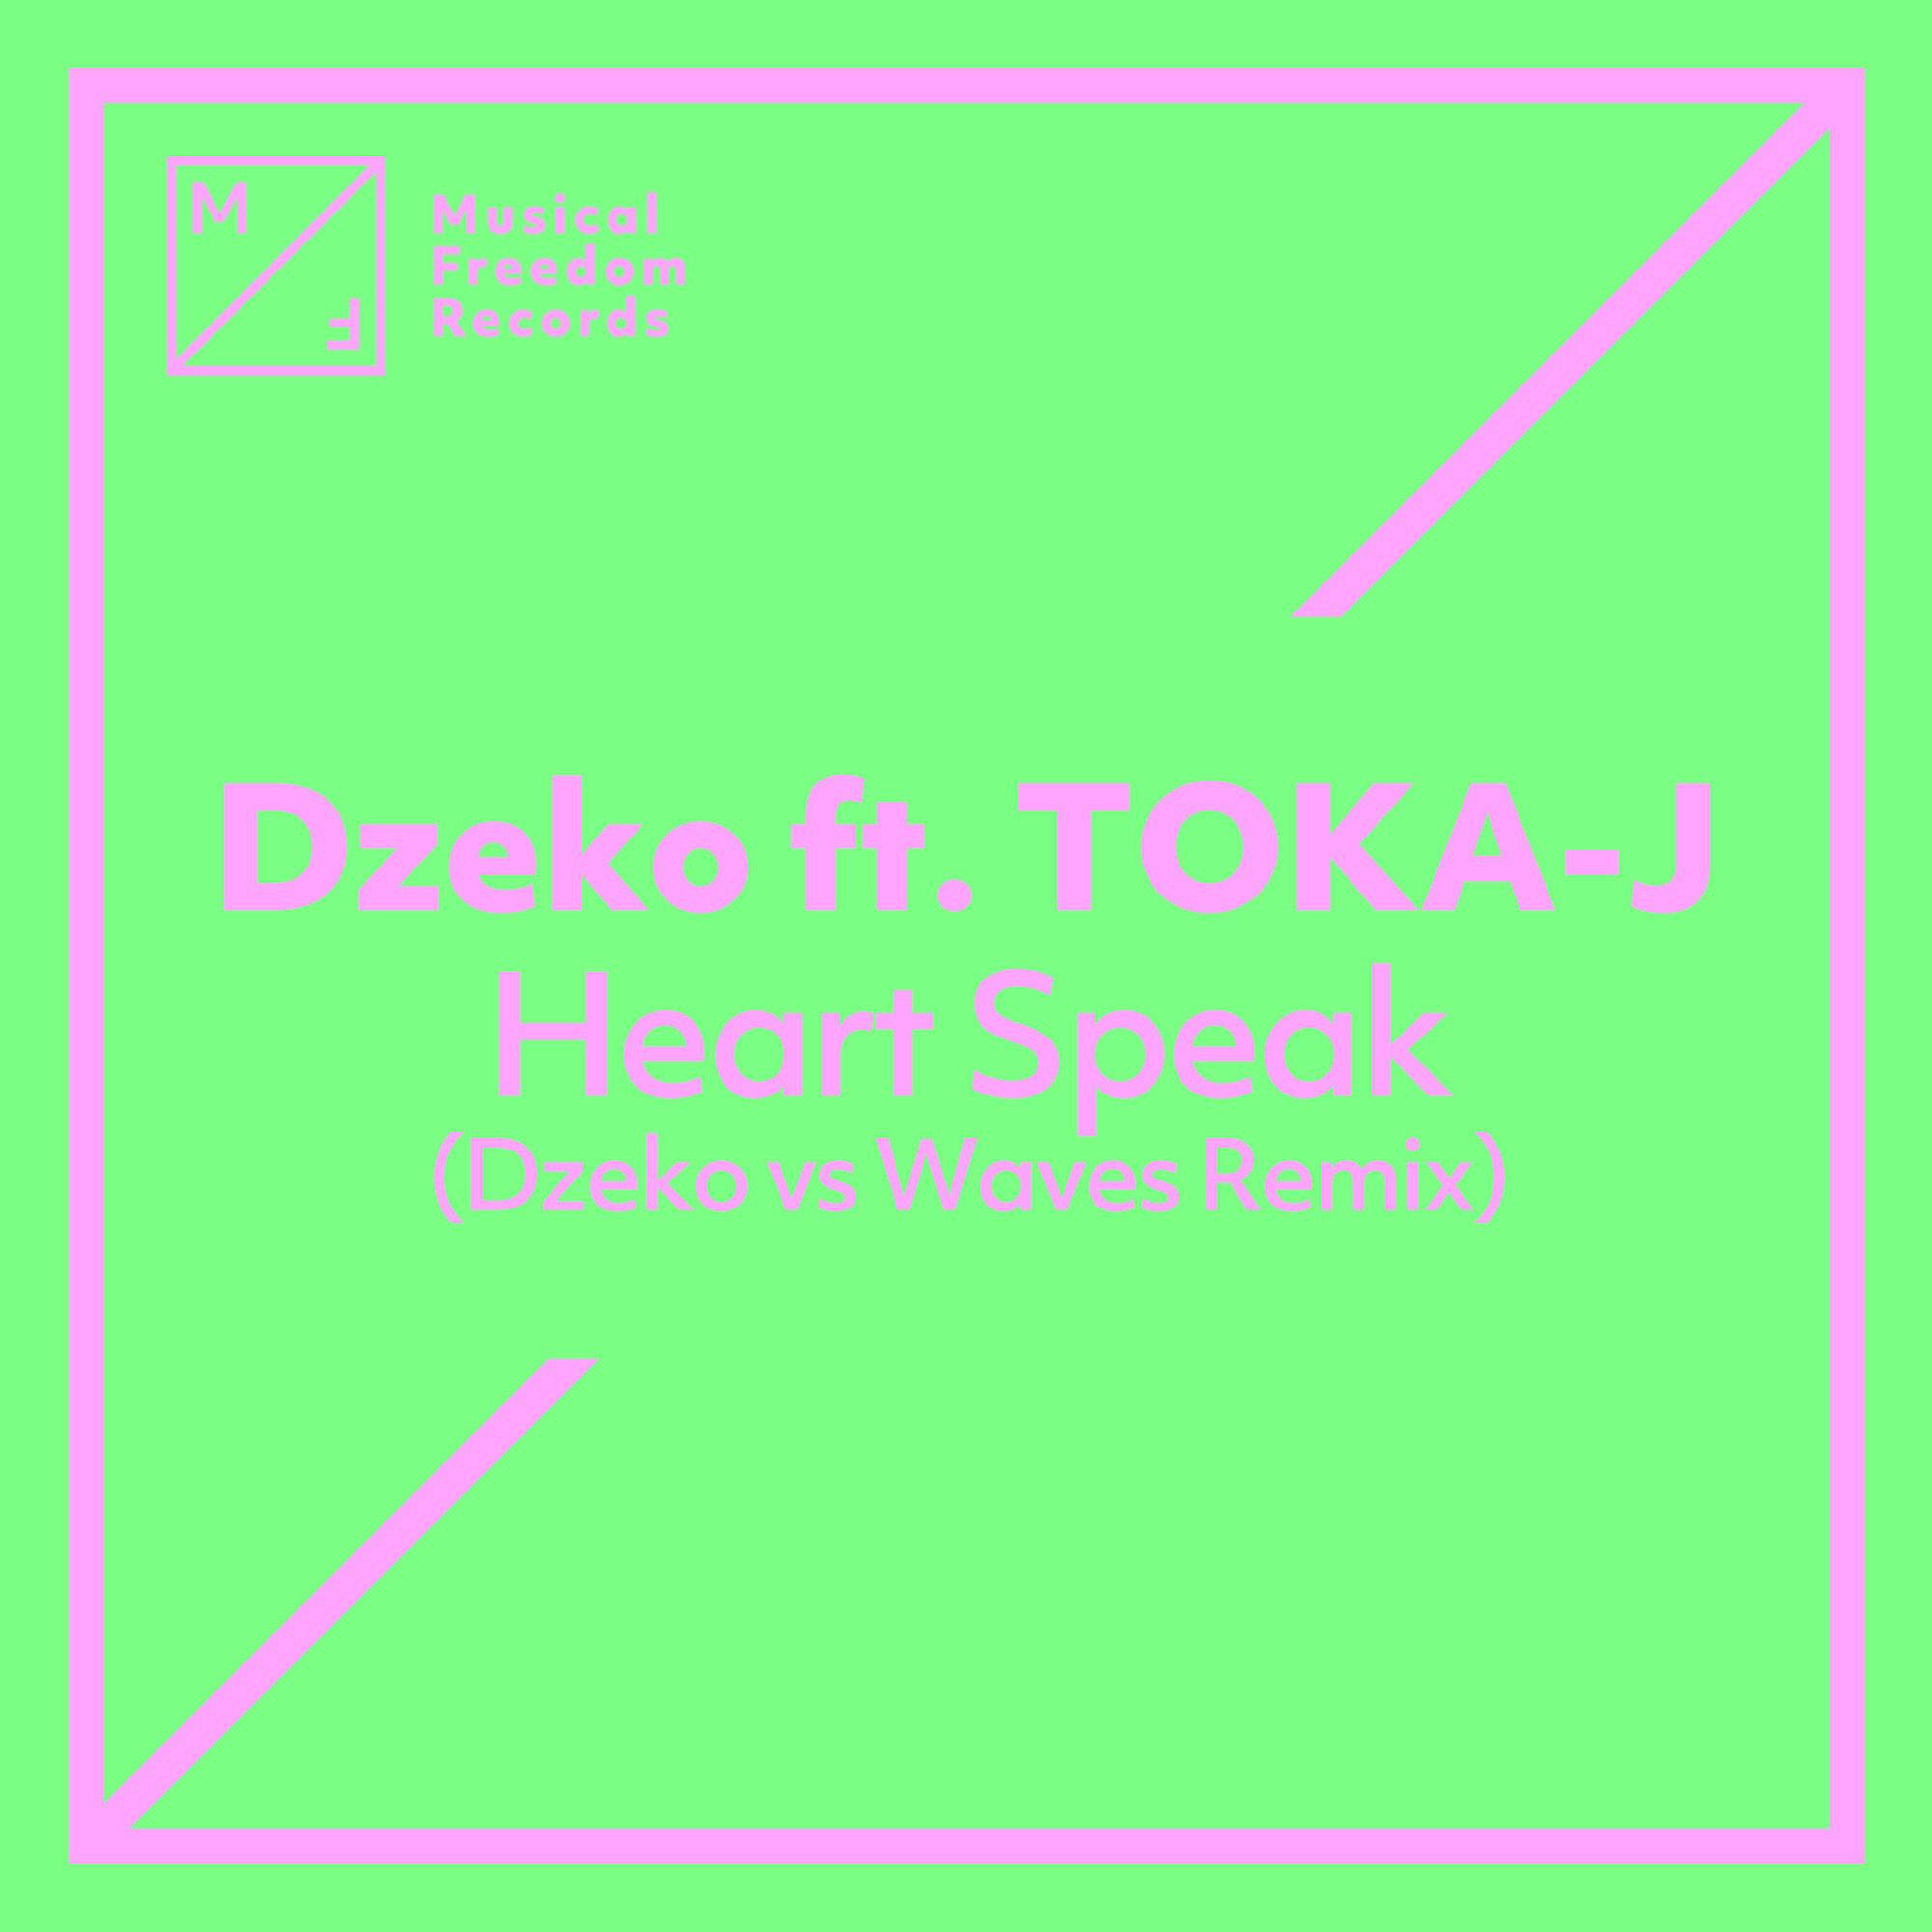 Heart Speak (Dzeko vs. Waves Remix)